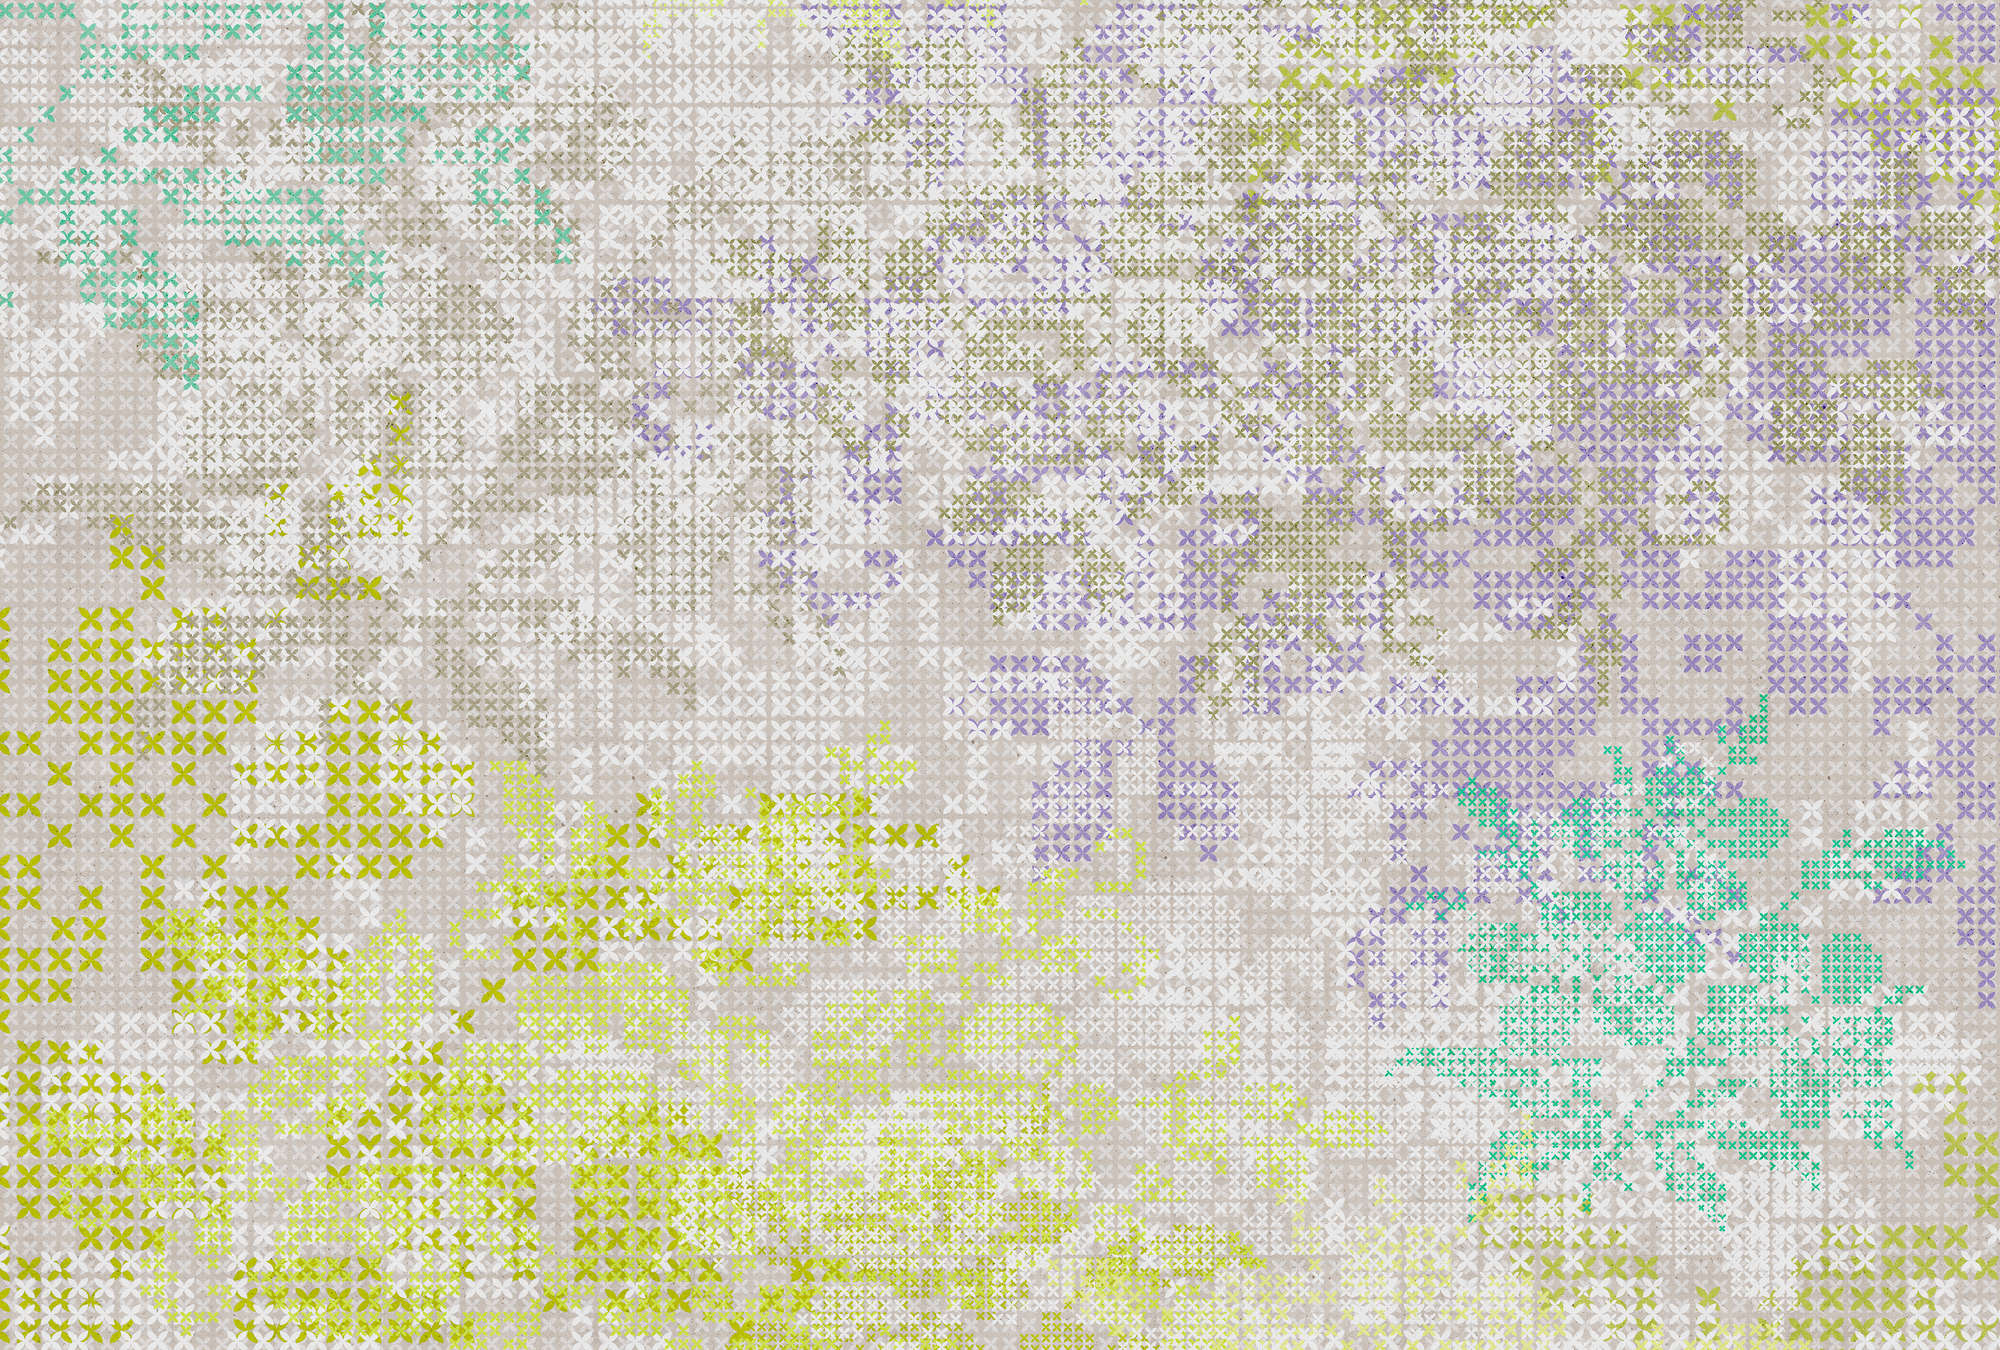             Blumen Fototapete mit Pixel Muster – Bunt, Grau
        